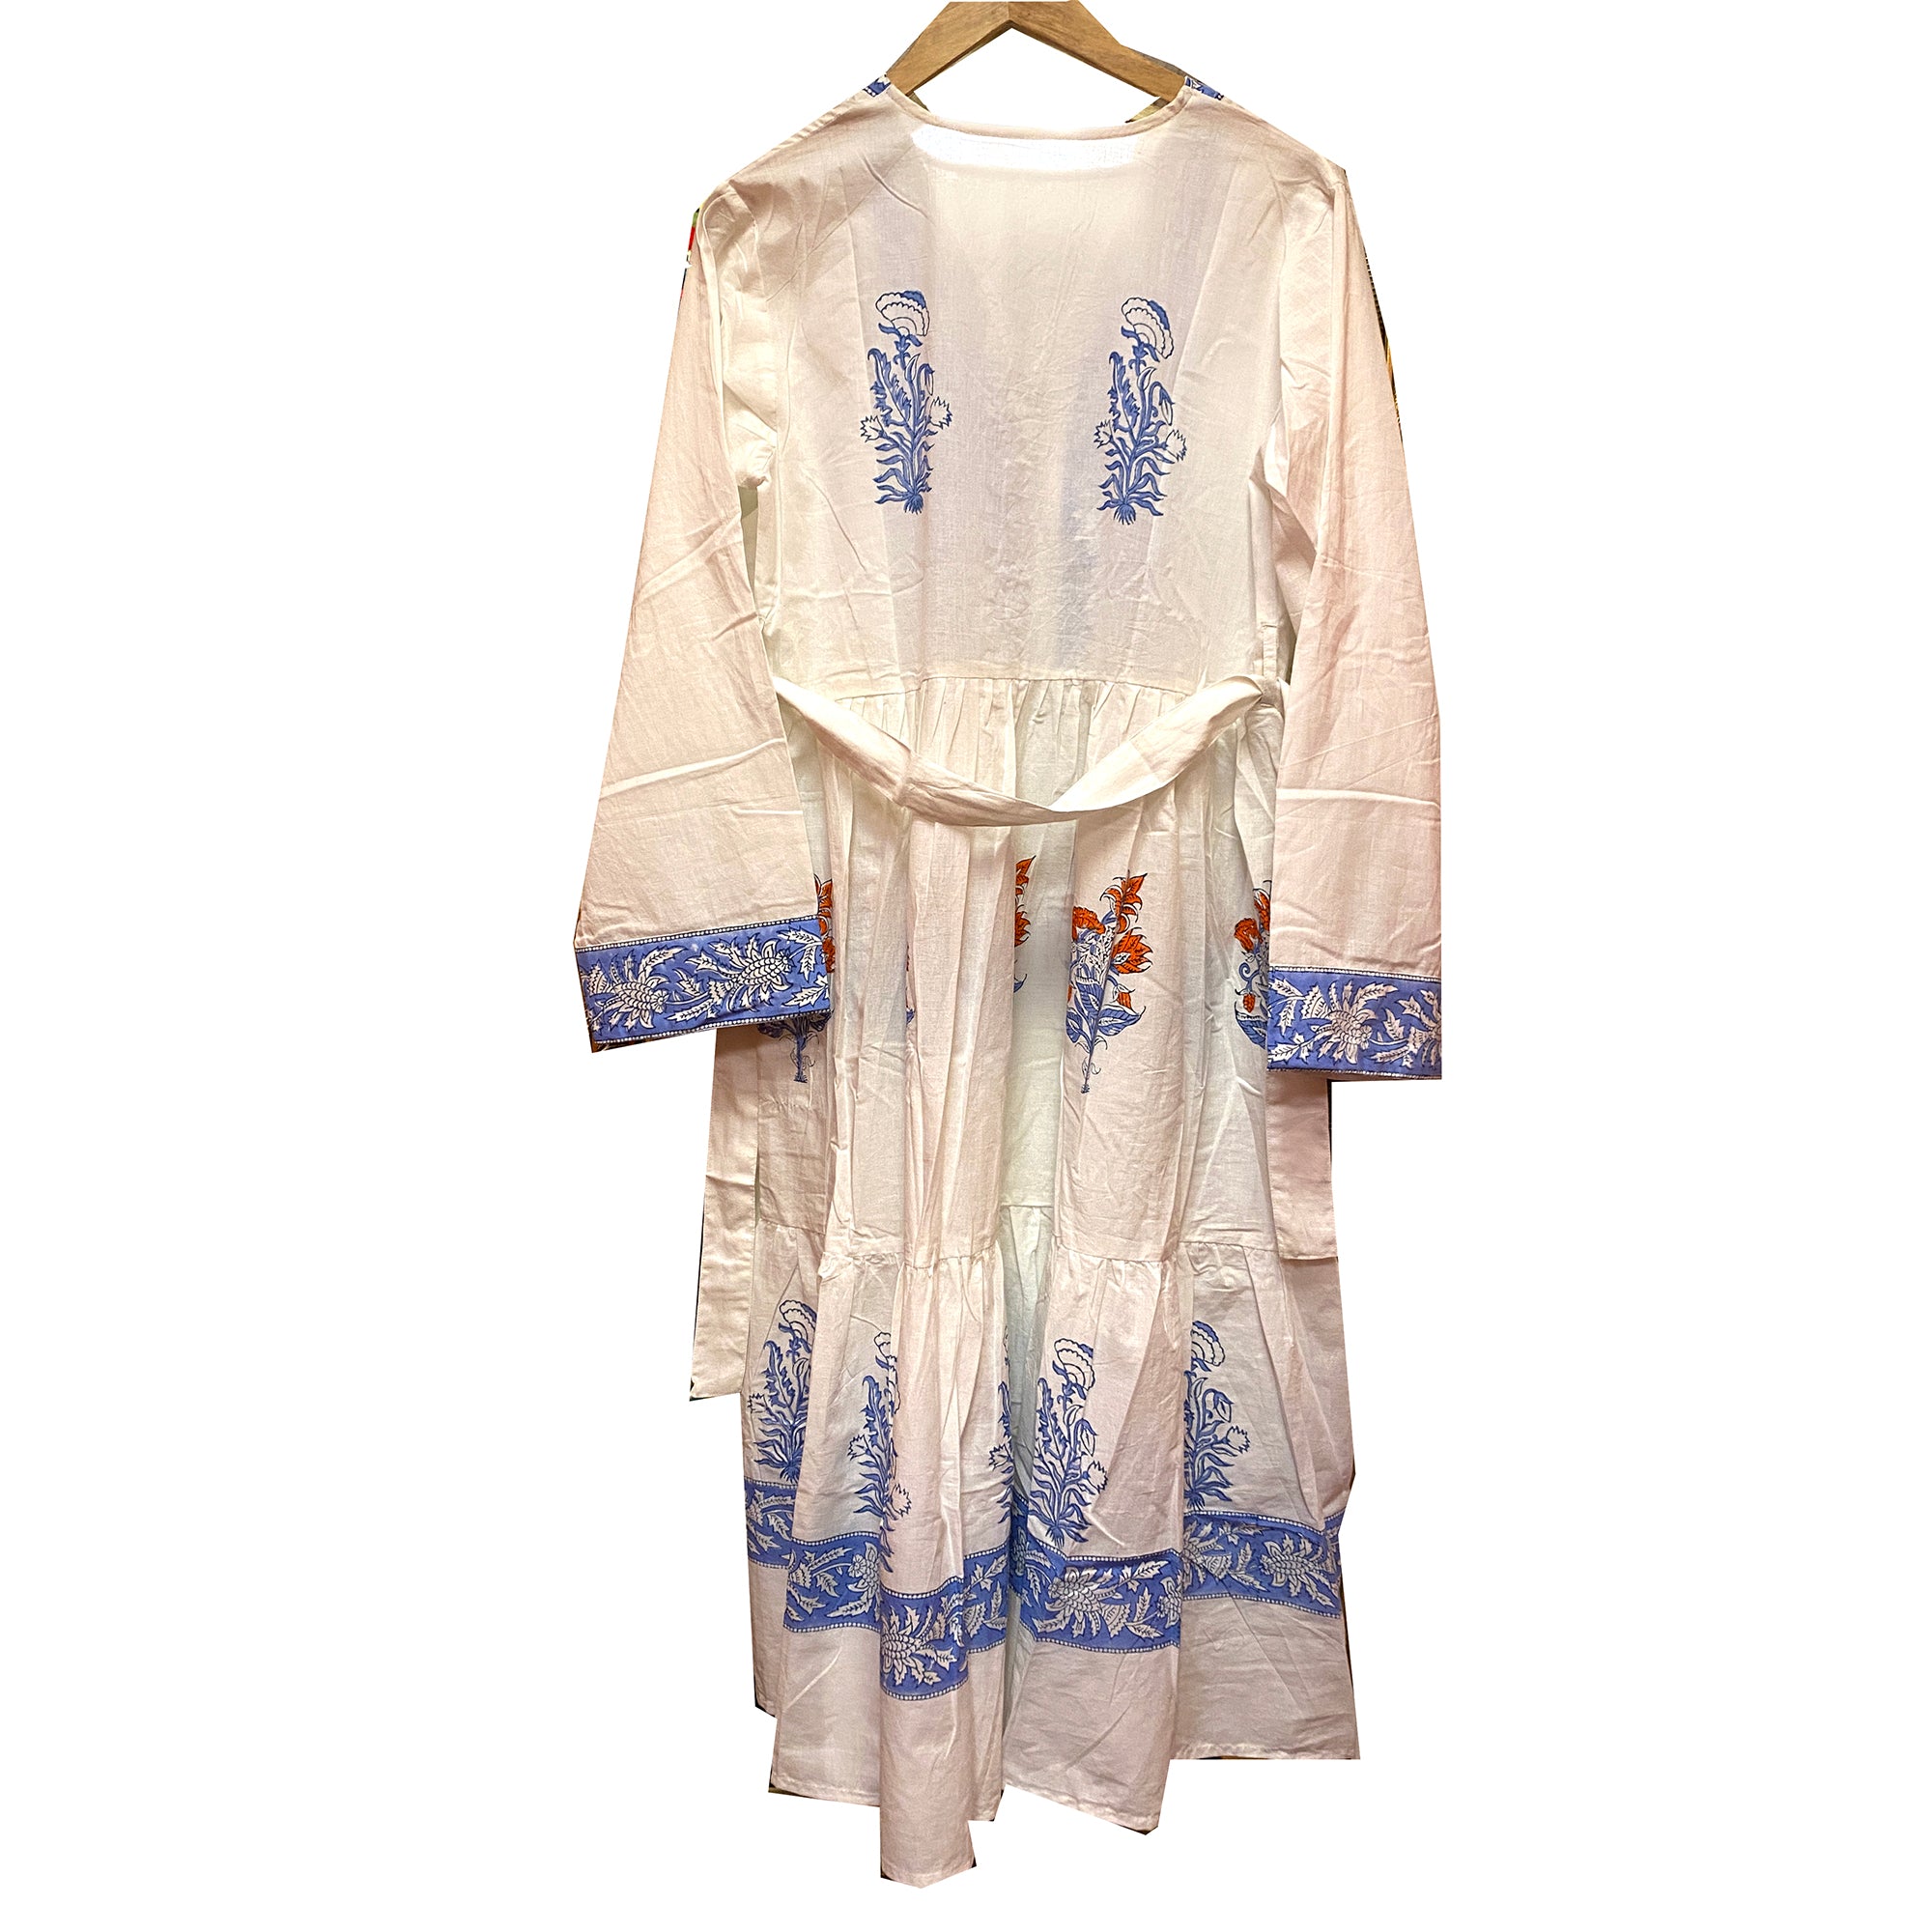 Blue & White Blockprint Dress - Vintage India NYC